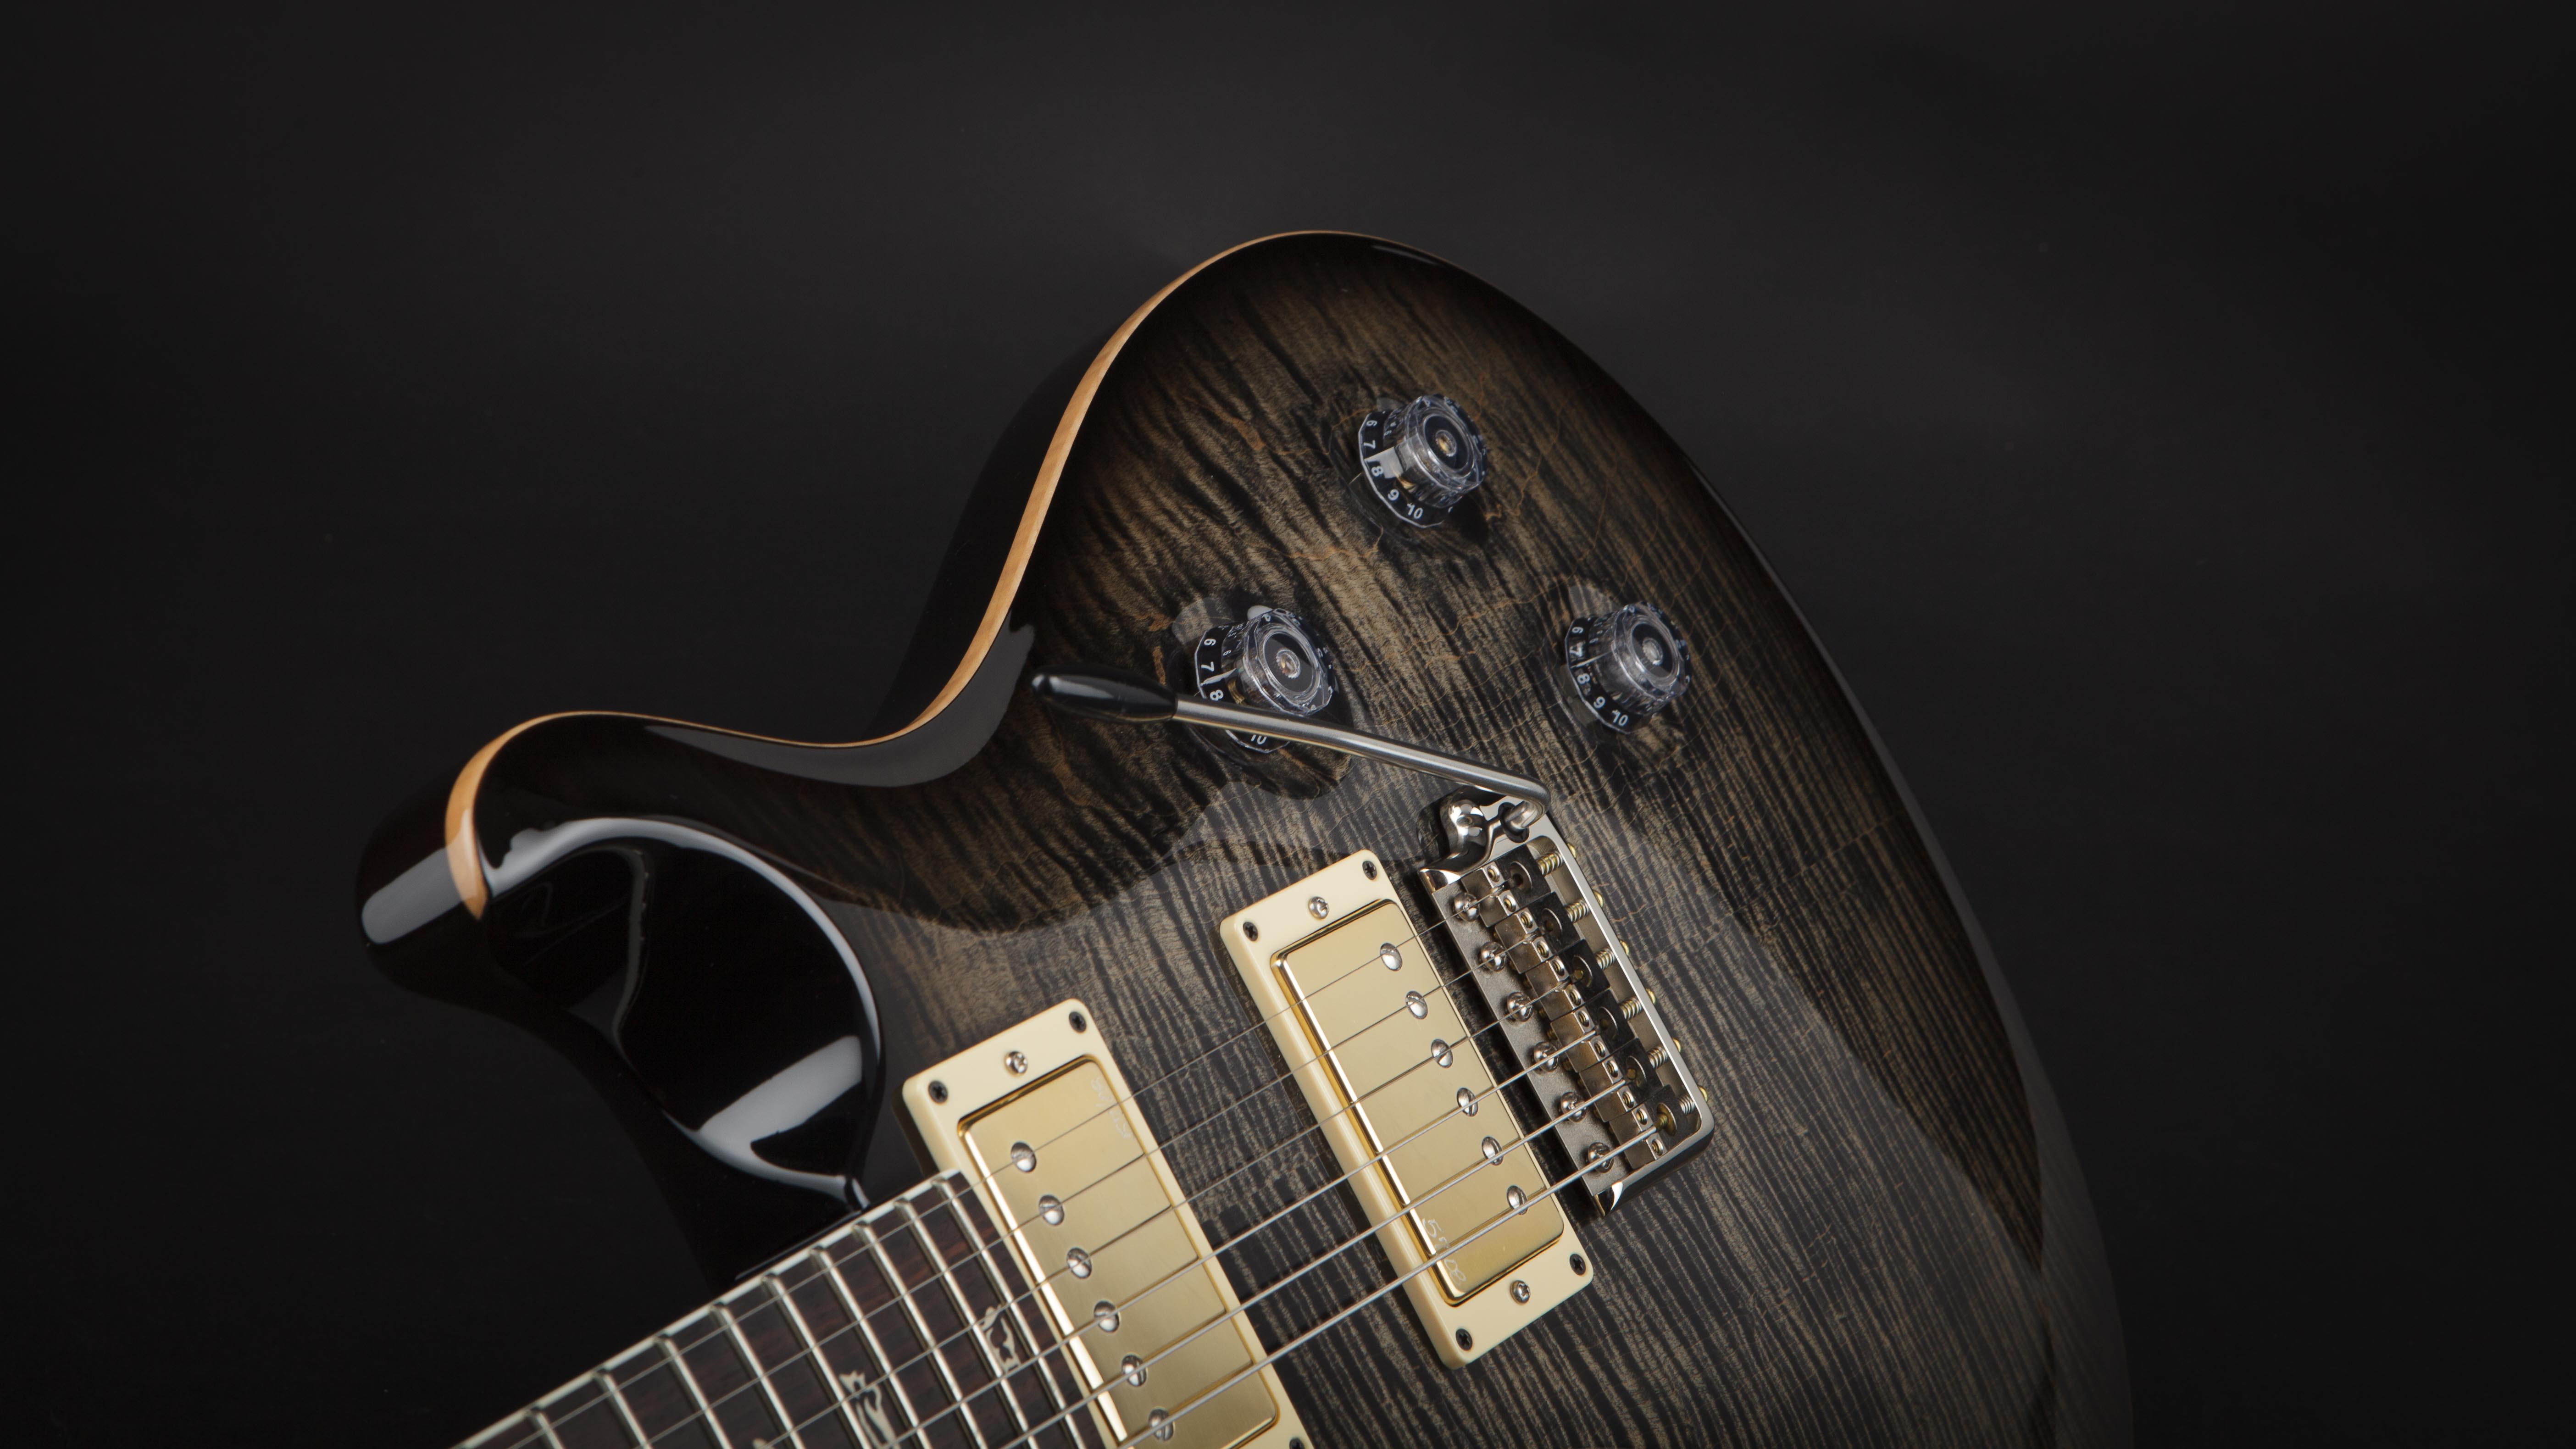 PRS Guitars: Custom 24 25th Anniversary Charcoal Burst 10 Top #160716